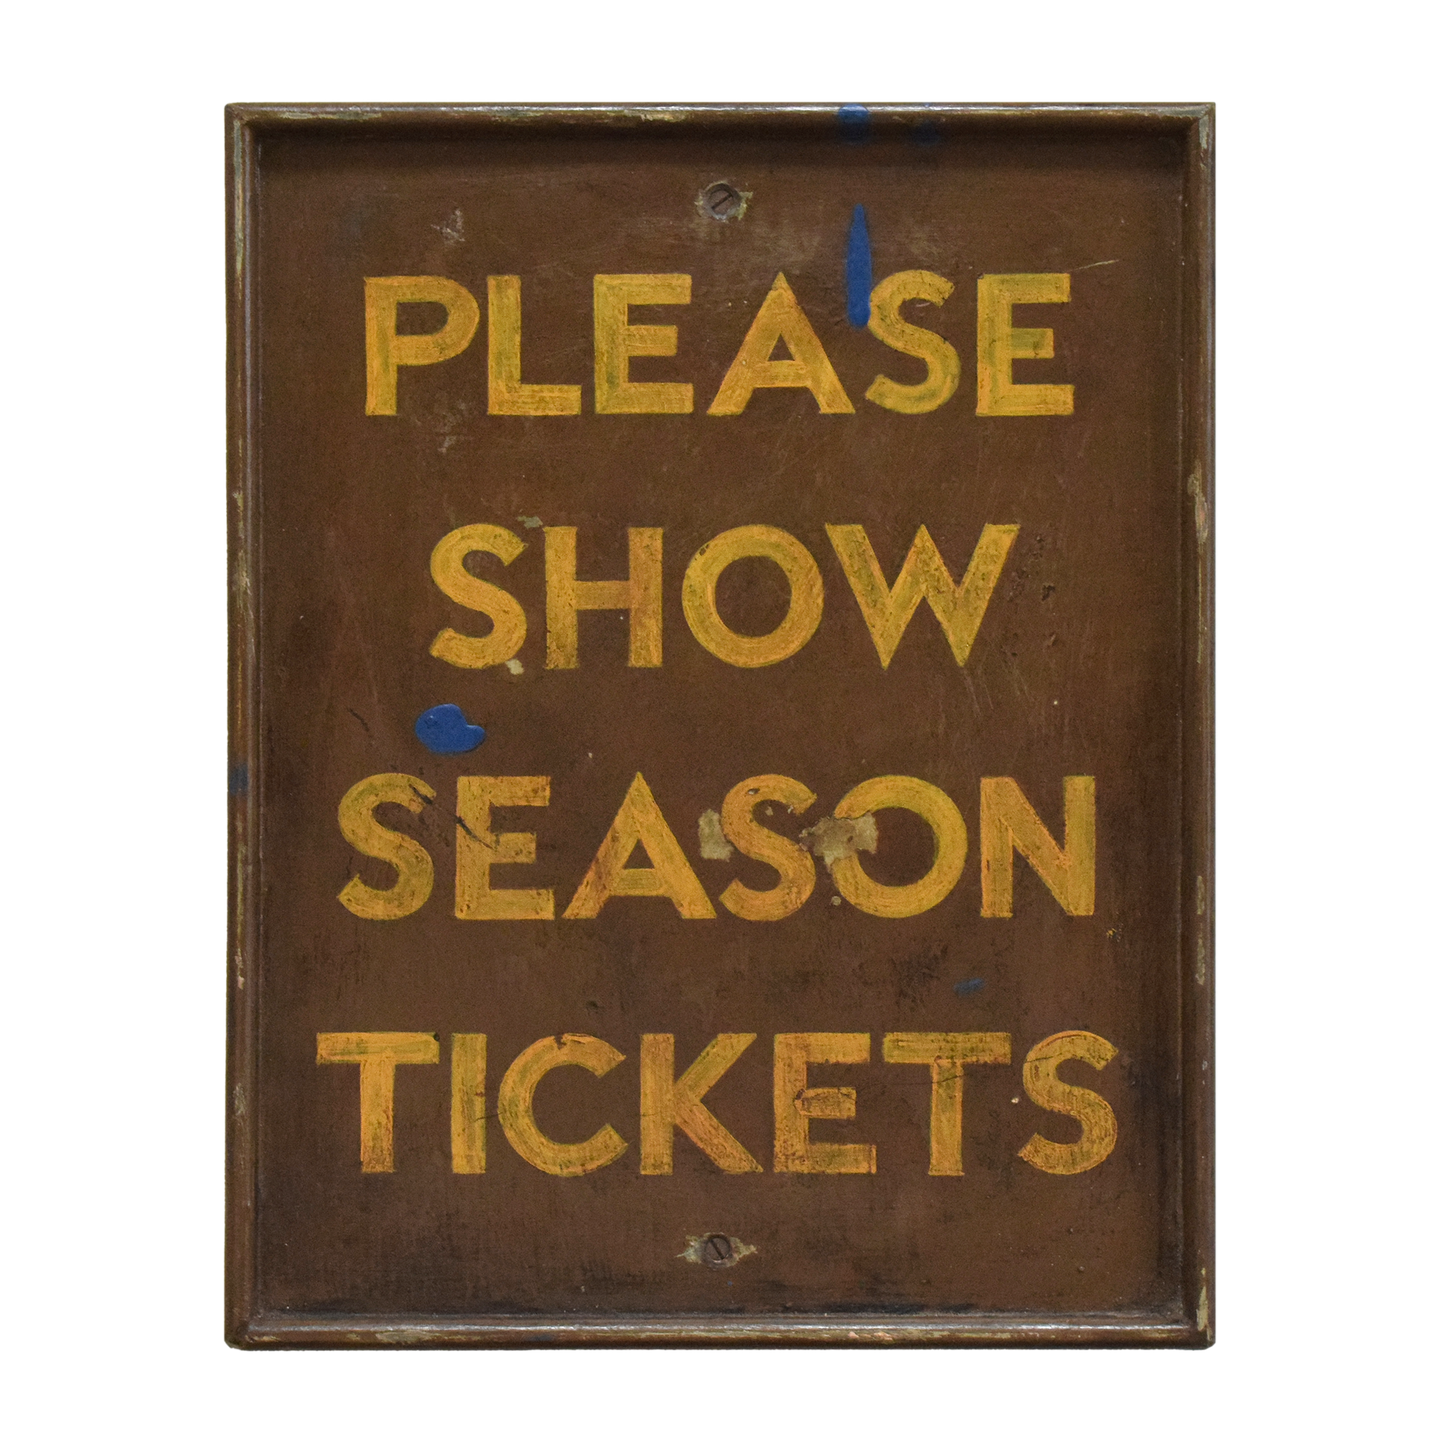 Please Show Tickets Vintage Wooden Railway Sign